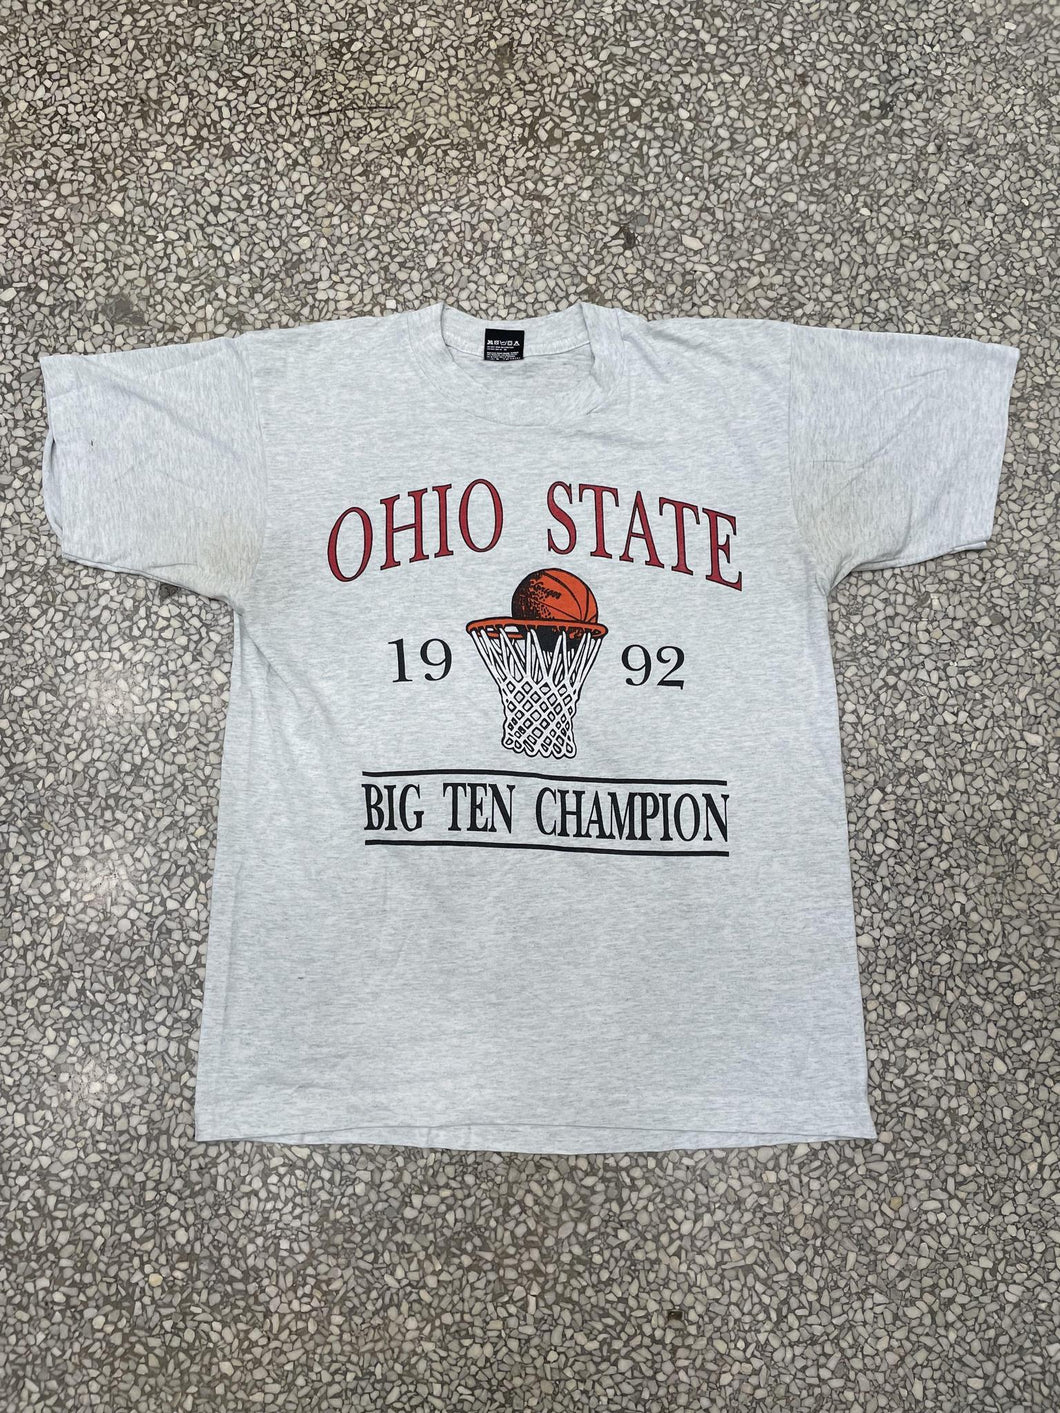 Ohio State Big Ten Champion 1992 Grey ABC Vintage 